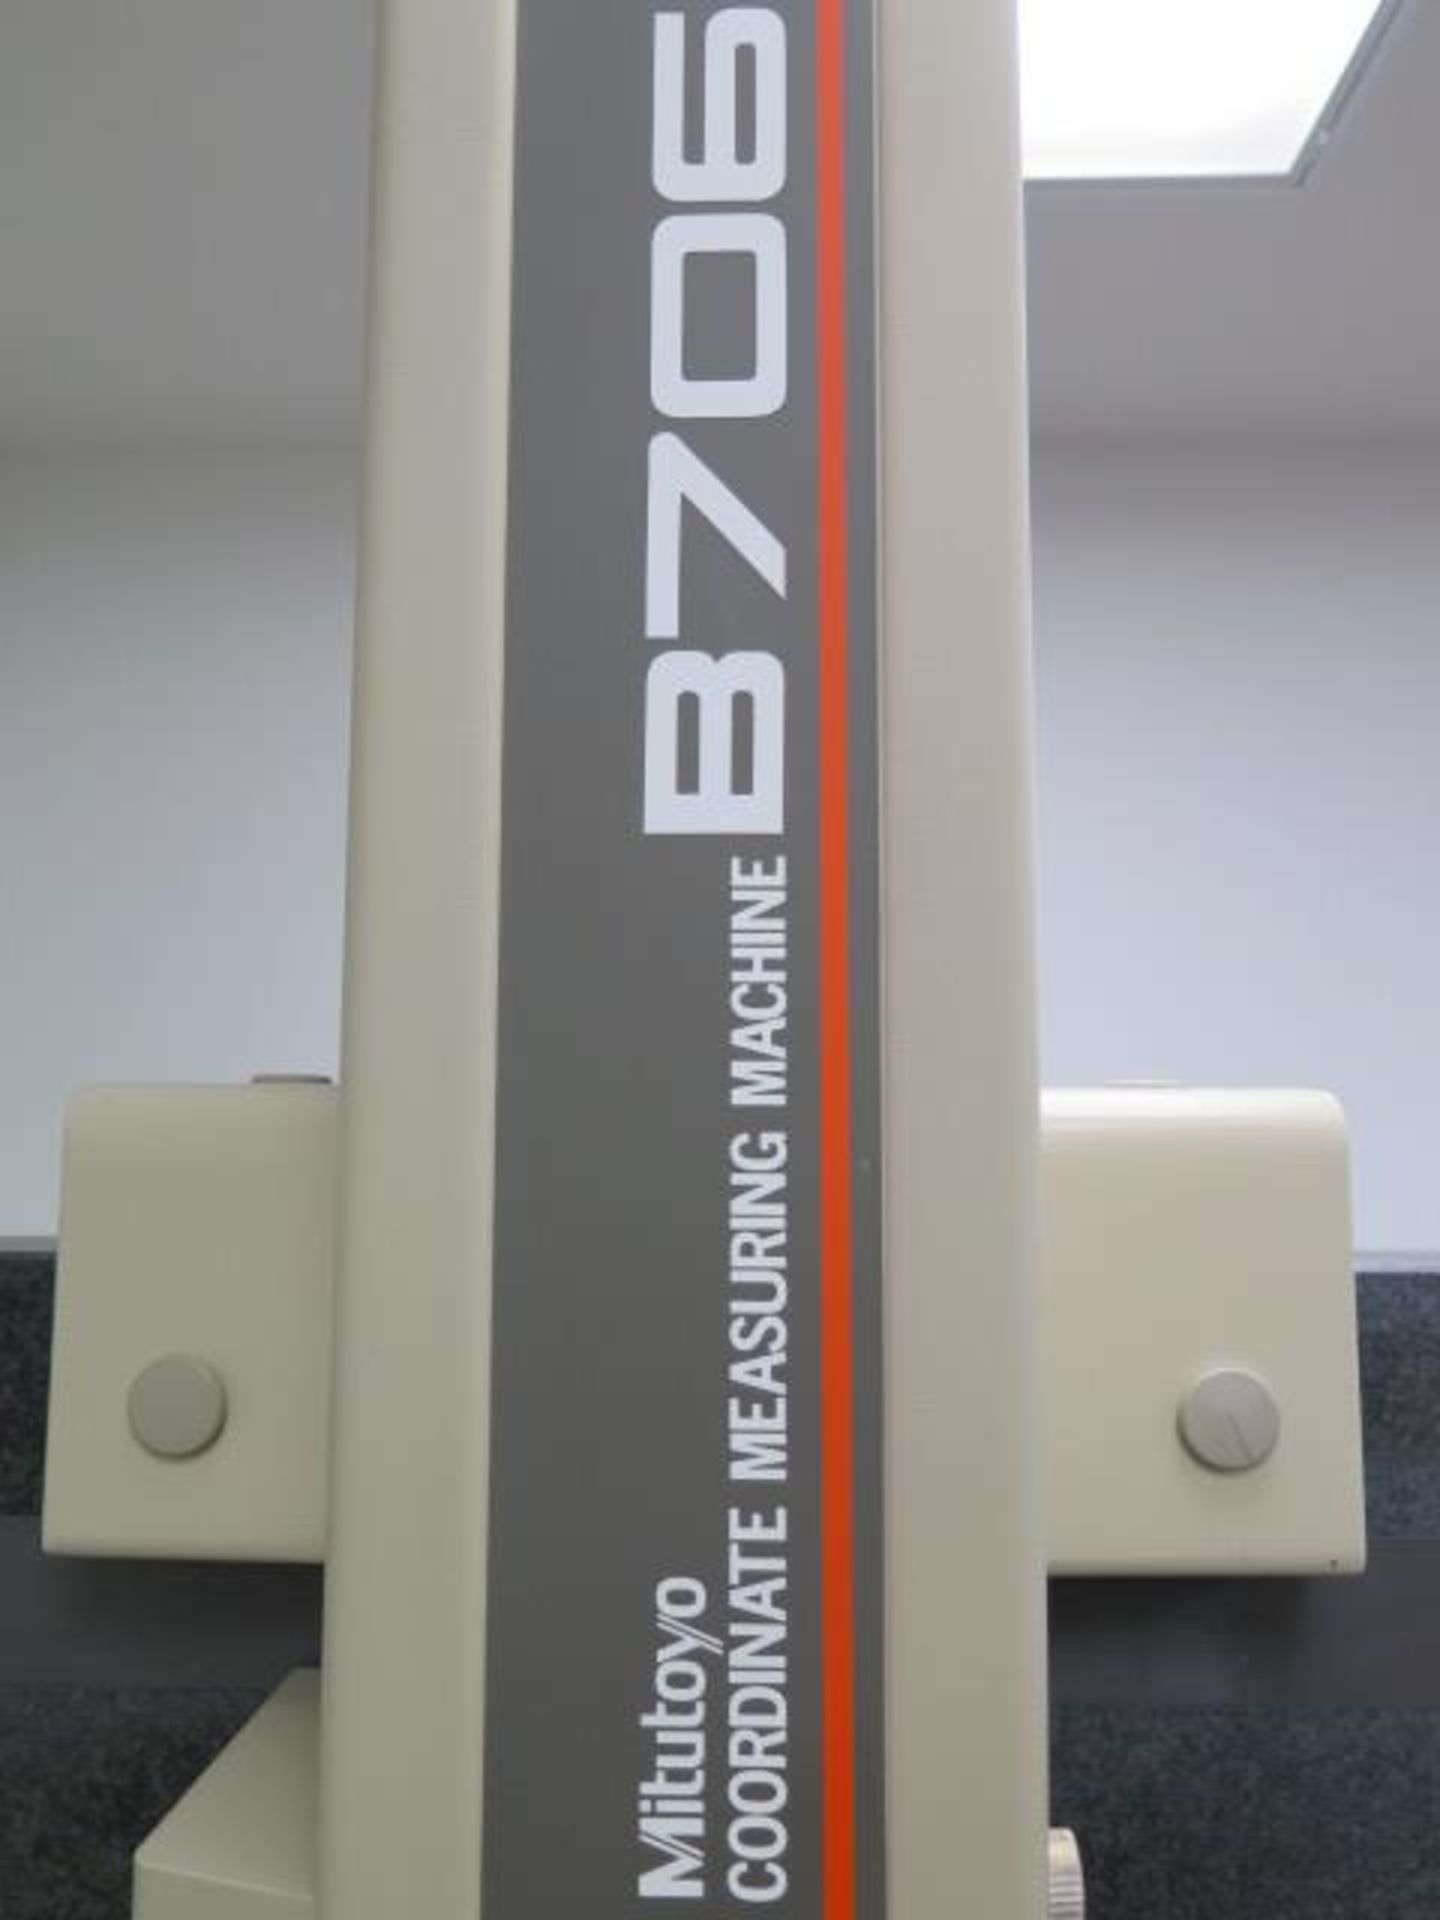 Mitutoyo B706 CMM Machine s/n A9102618-011102001 w/ Renishaw MIH Digital Probe Head, SOLD AS IS - Image 17 of 17